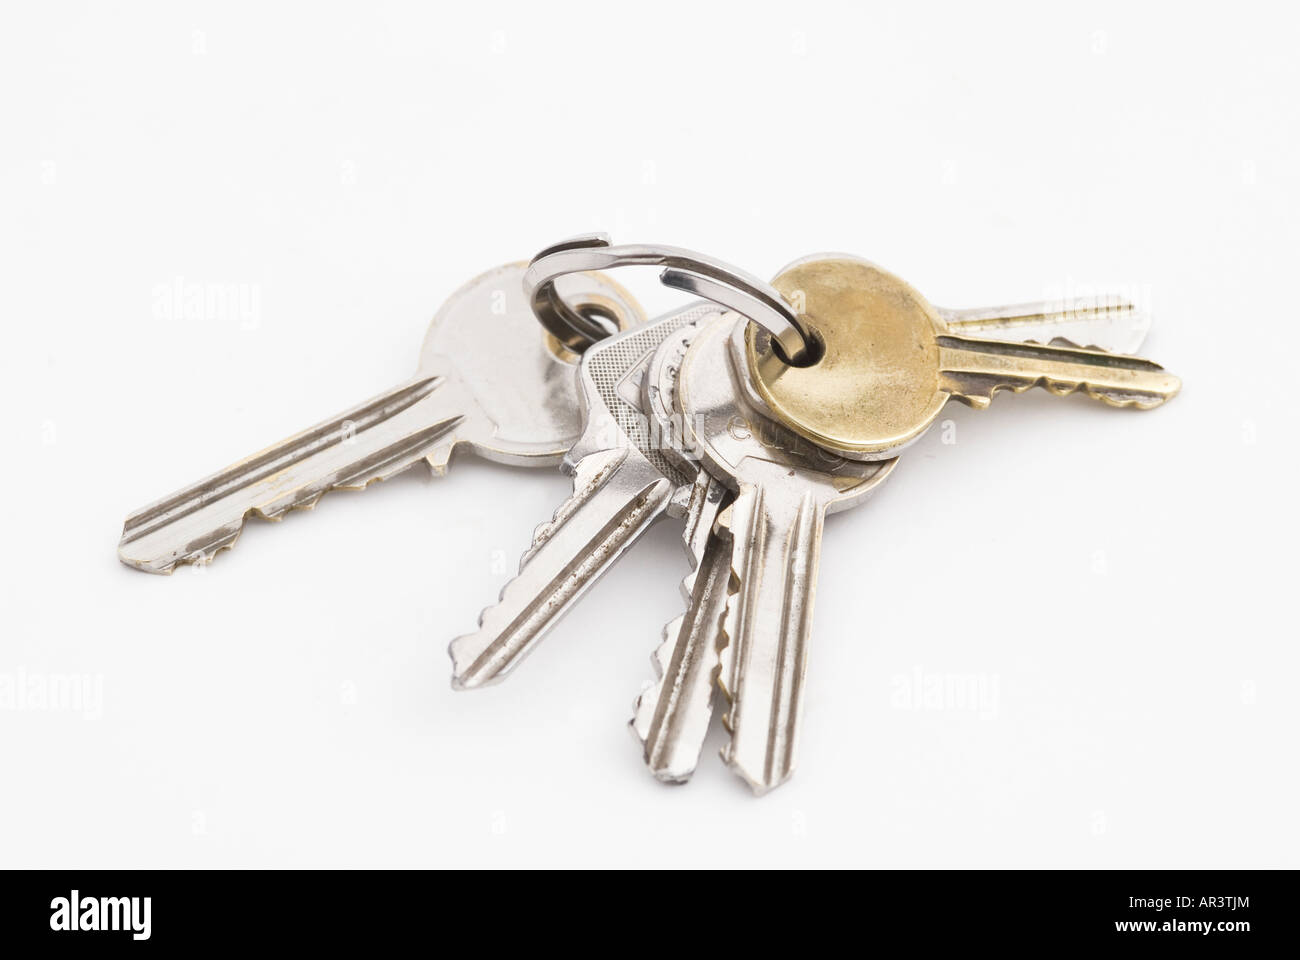 Bunch of house keys on white background Stock Photo